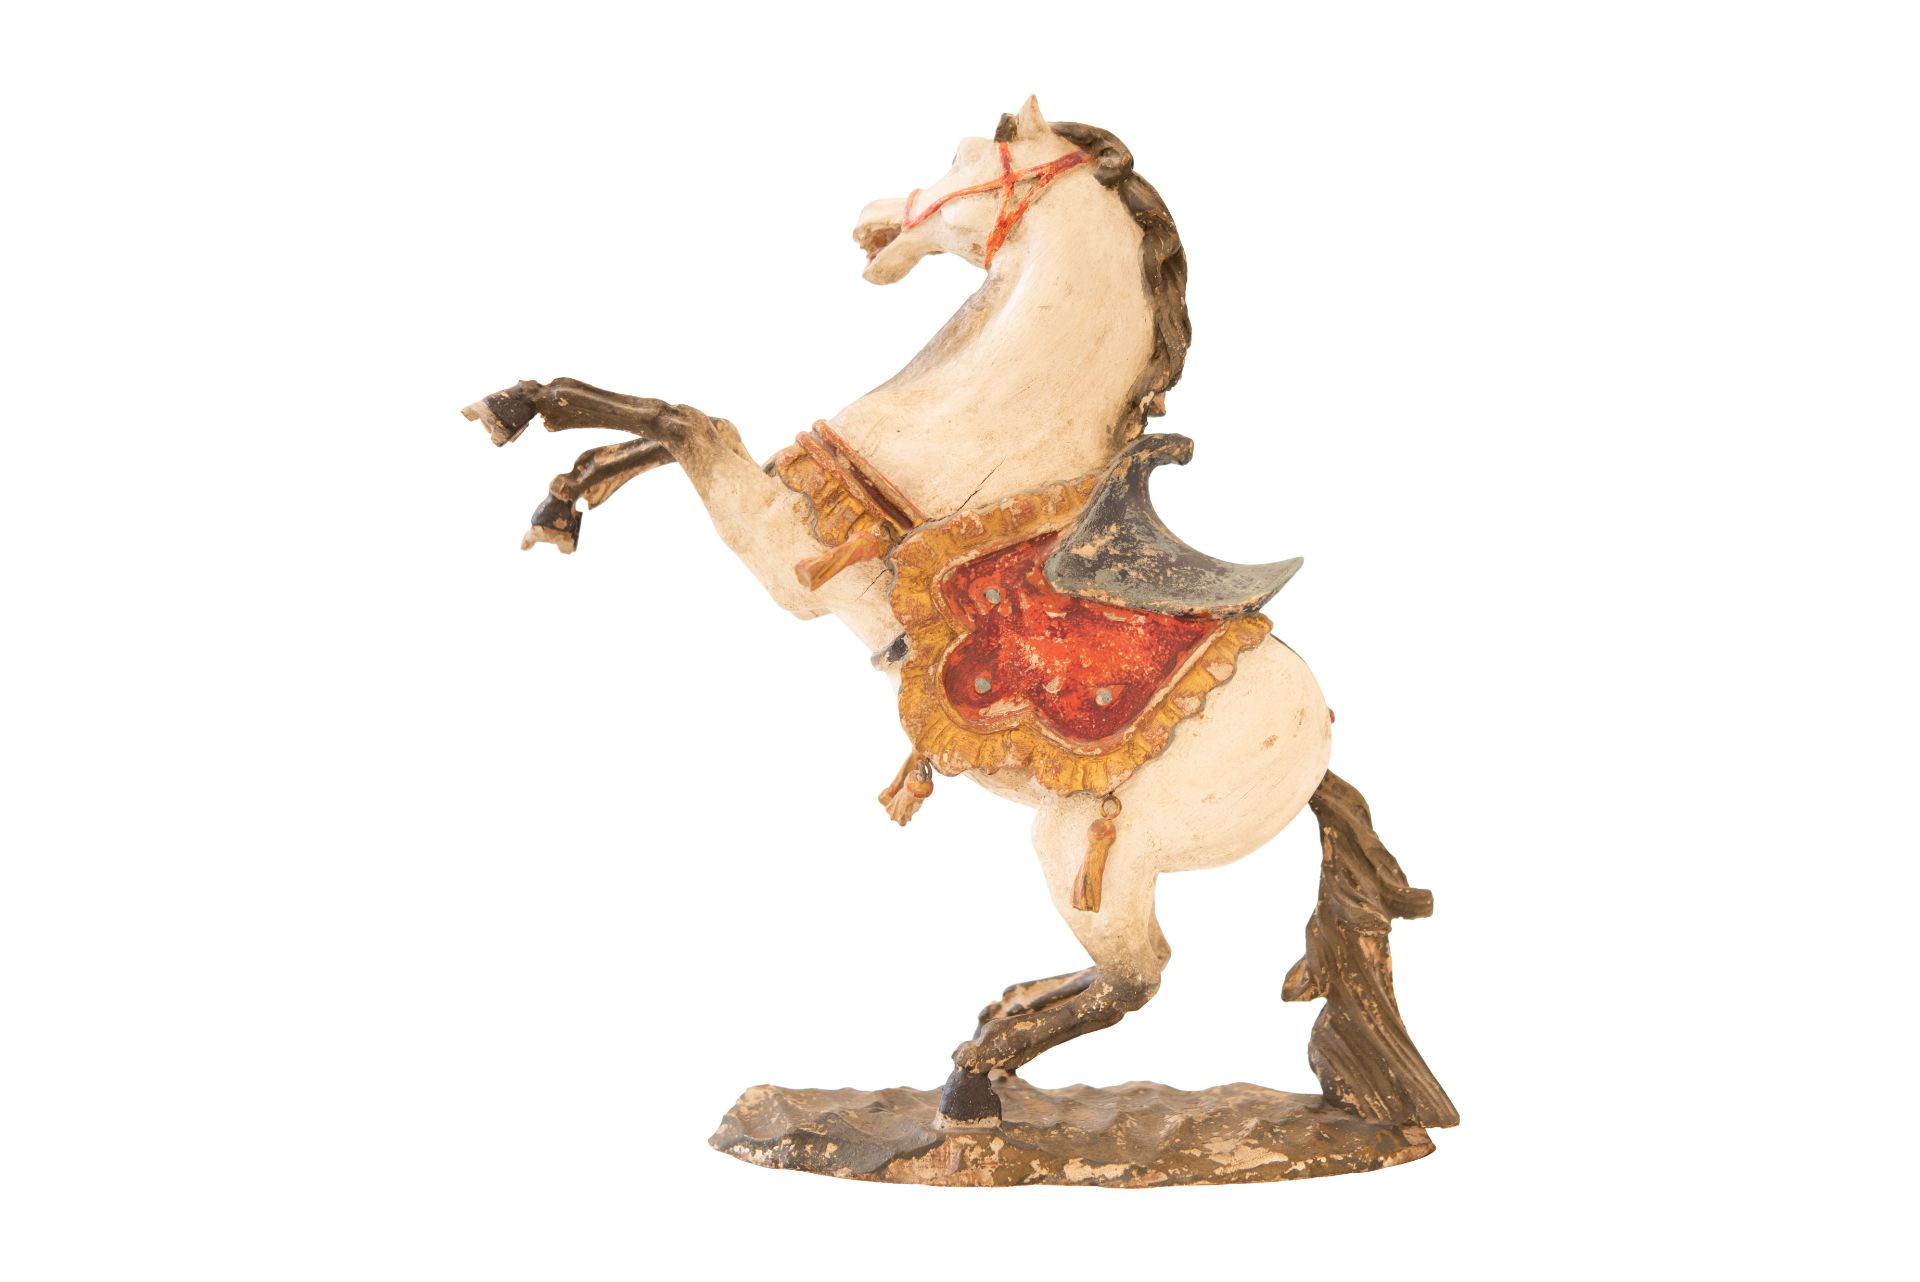 Holzpferd auf Plinthe |Wooden Horse on Plinth - Image 2 of 5